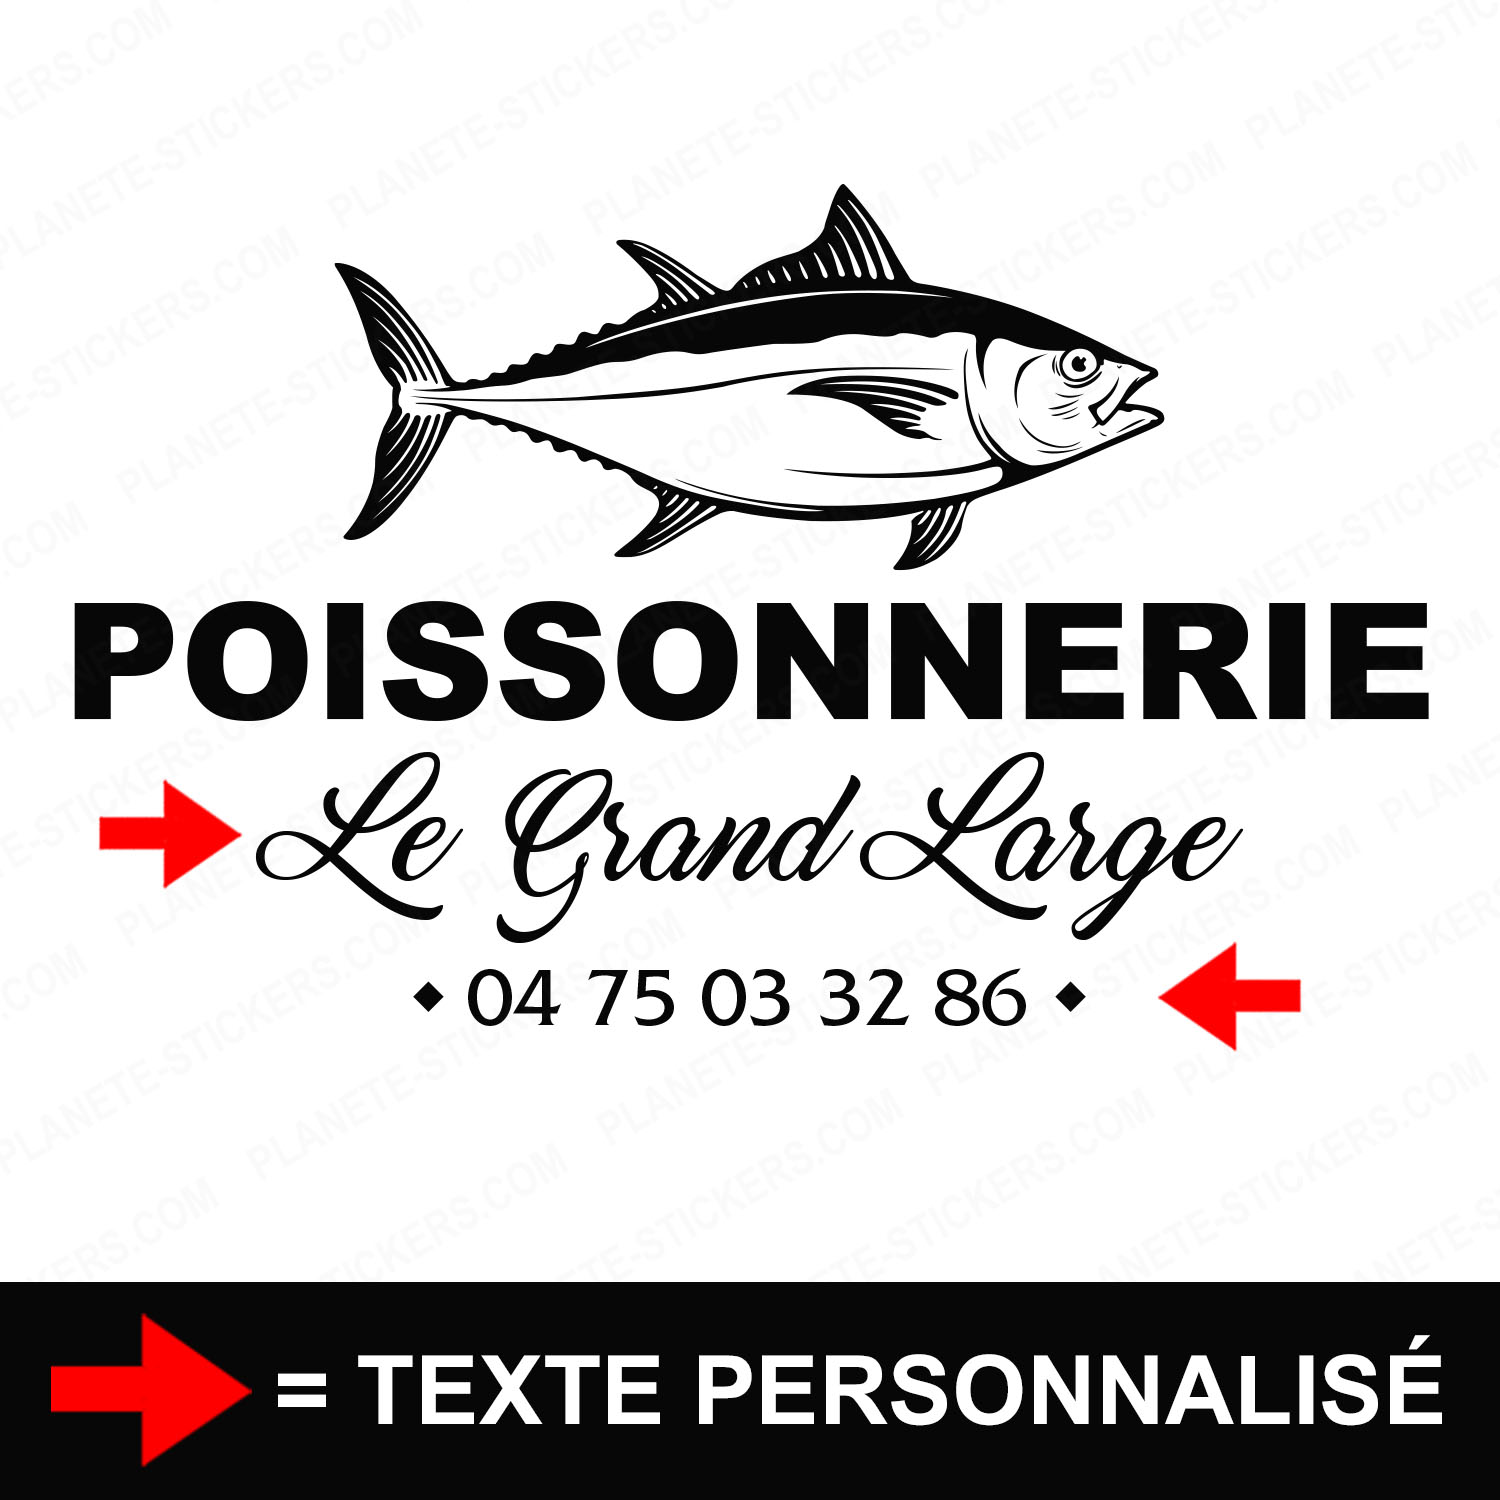 ref4poissonnerievitrine-stickers-poissonnerie-vitrine-sticker-personnalisé-autocollant-poissonnier-pro-vitre-poisson-professionnel-logo-thon-2